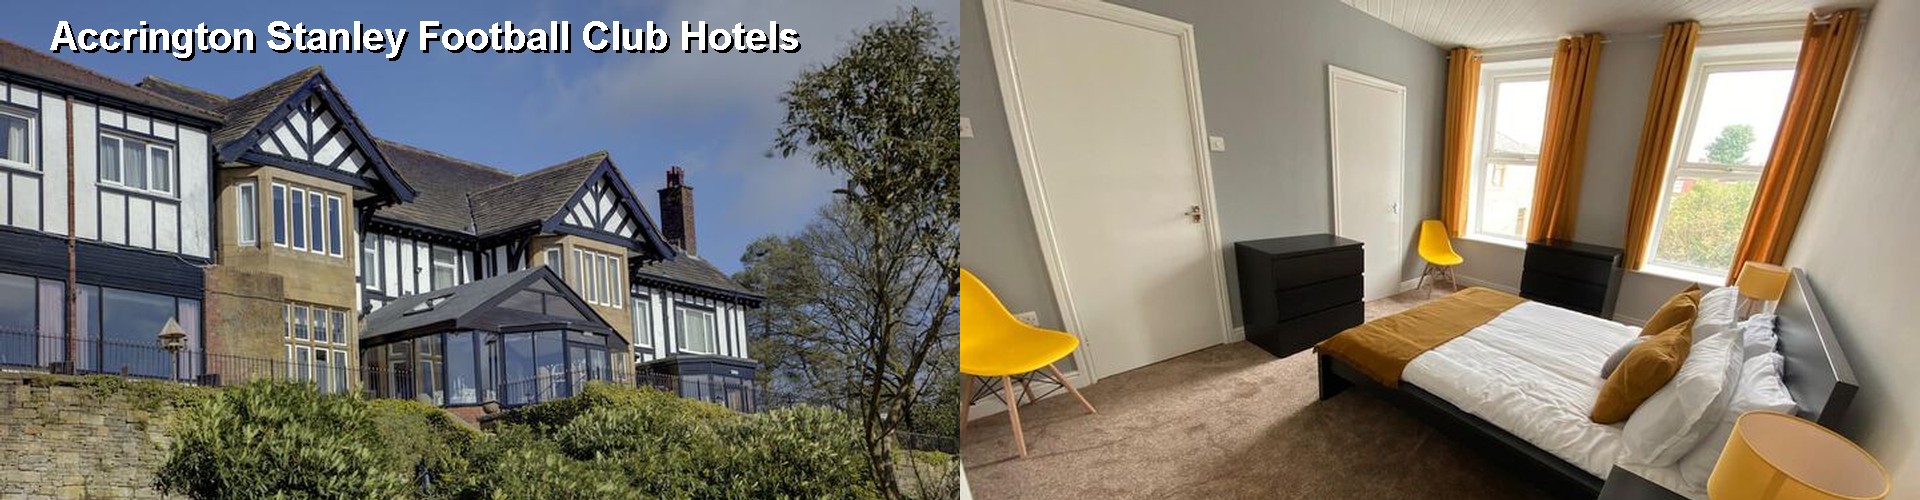 5 Best Hotels near Accrington Stanley Football Club